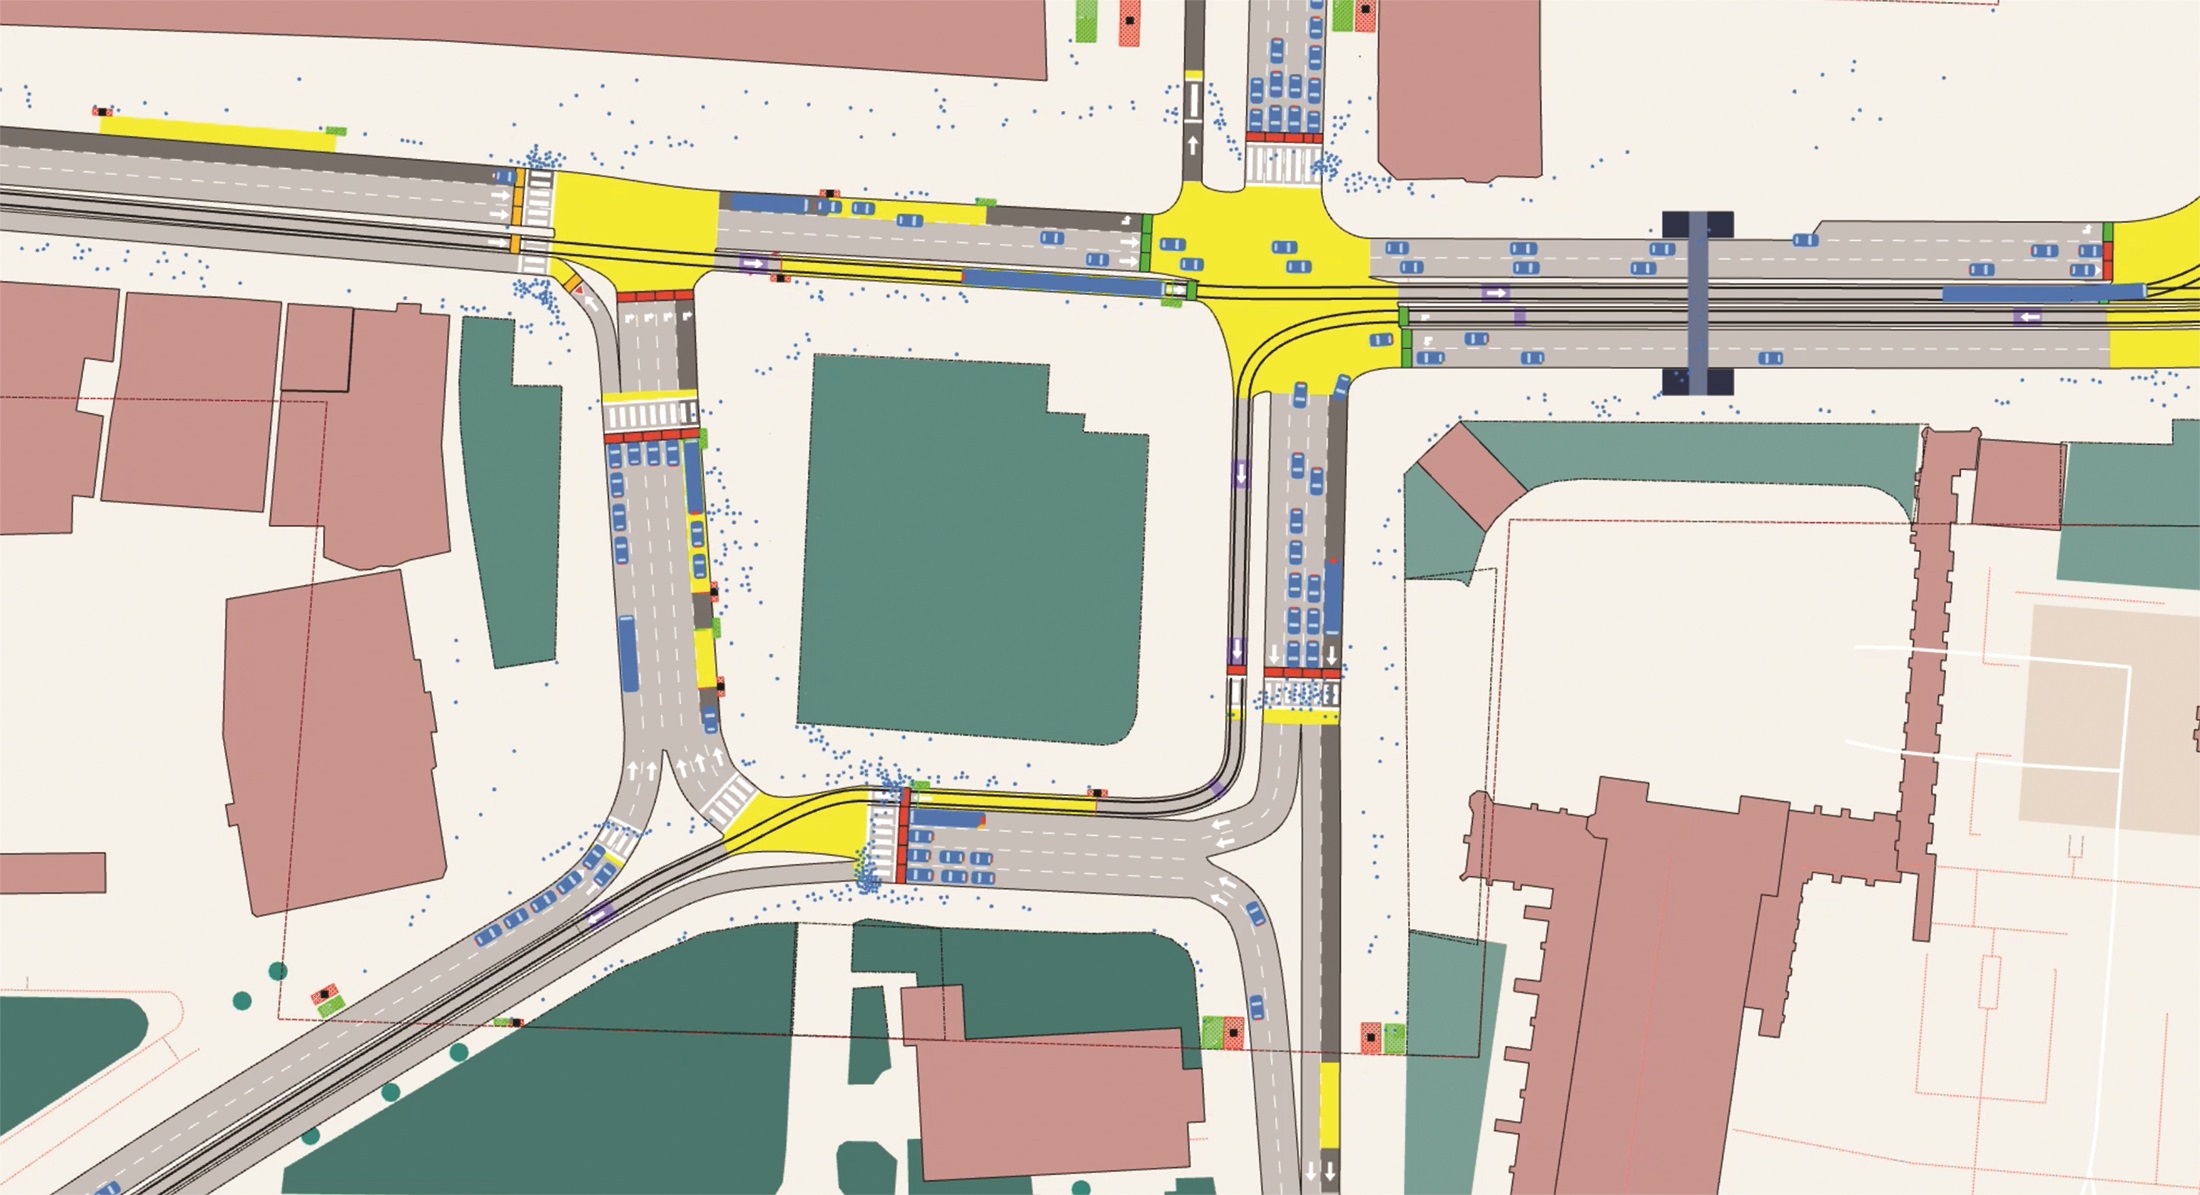 Classic Aimsun Next microsimulation traffic modelling